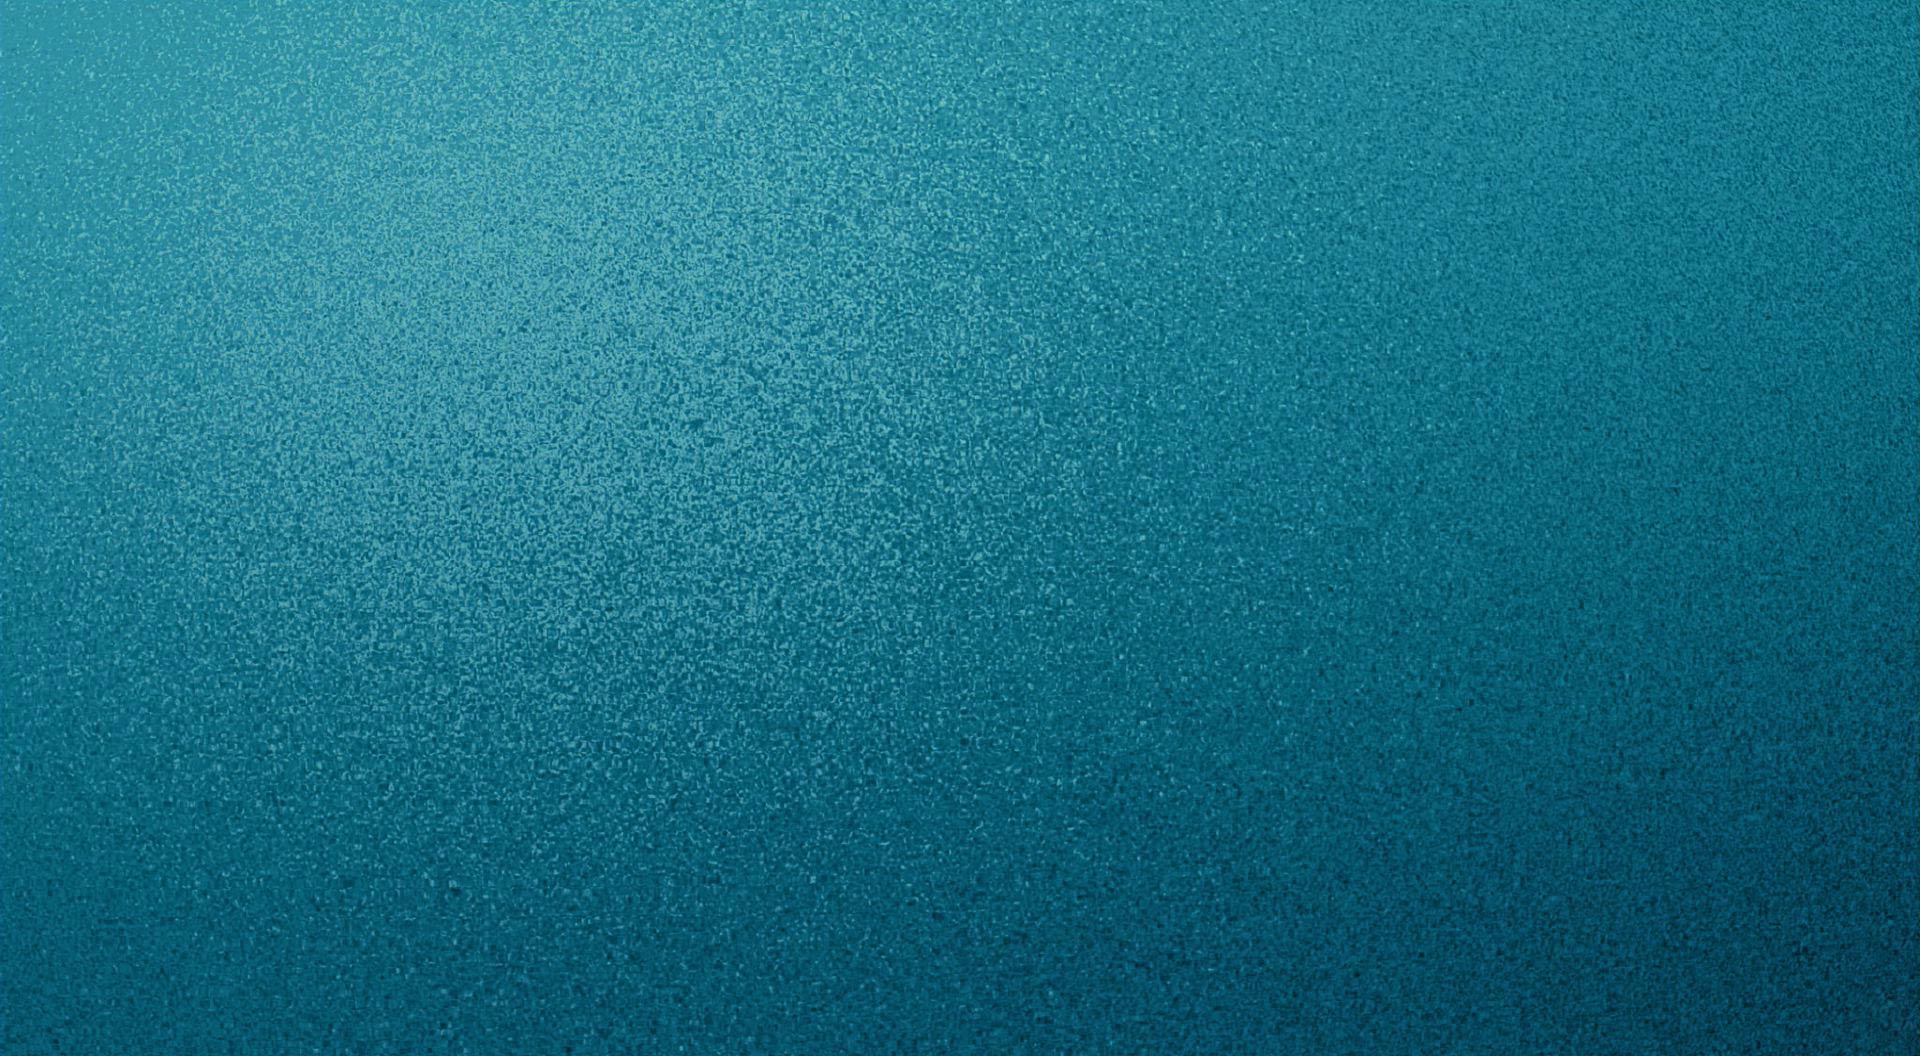 Aqua Blue Textured Speckled Desktop Background Wallpaper For Use With